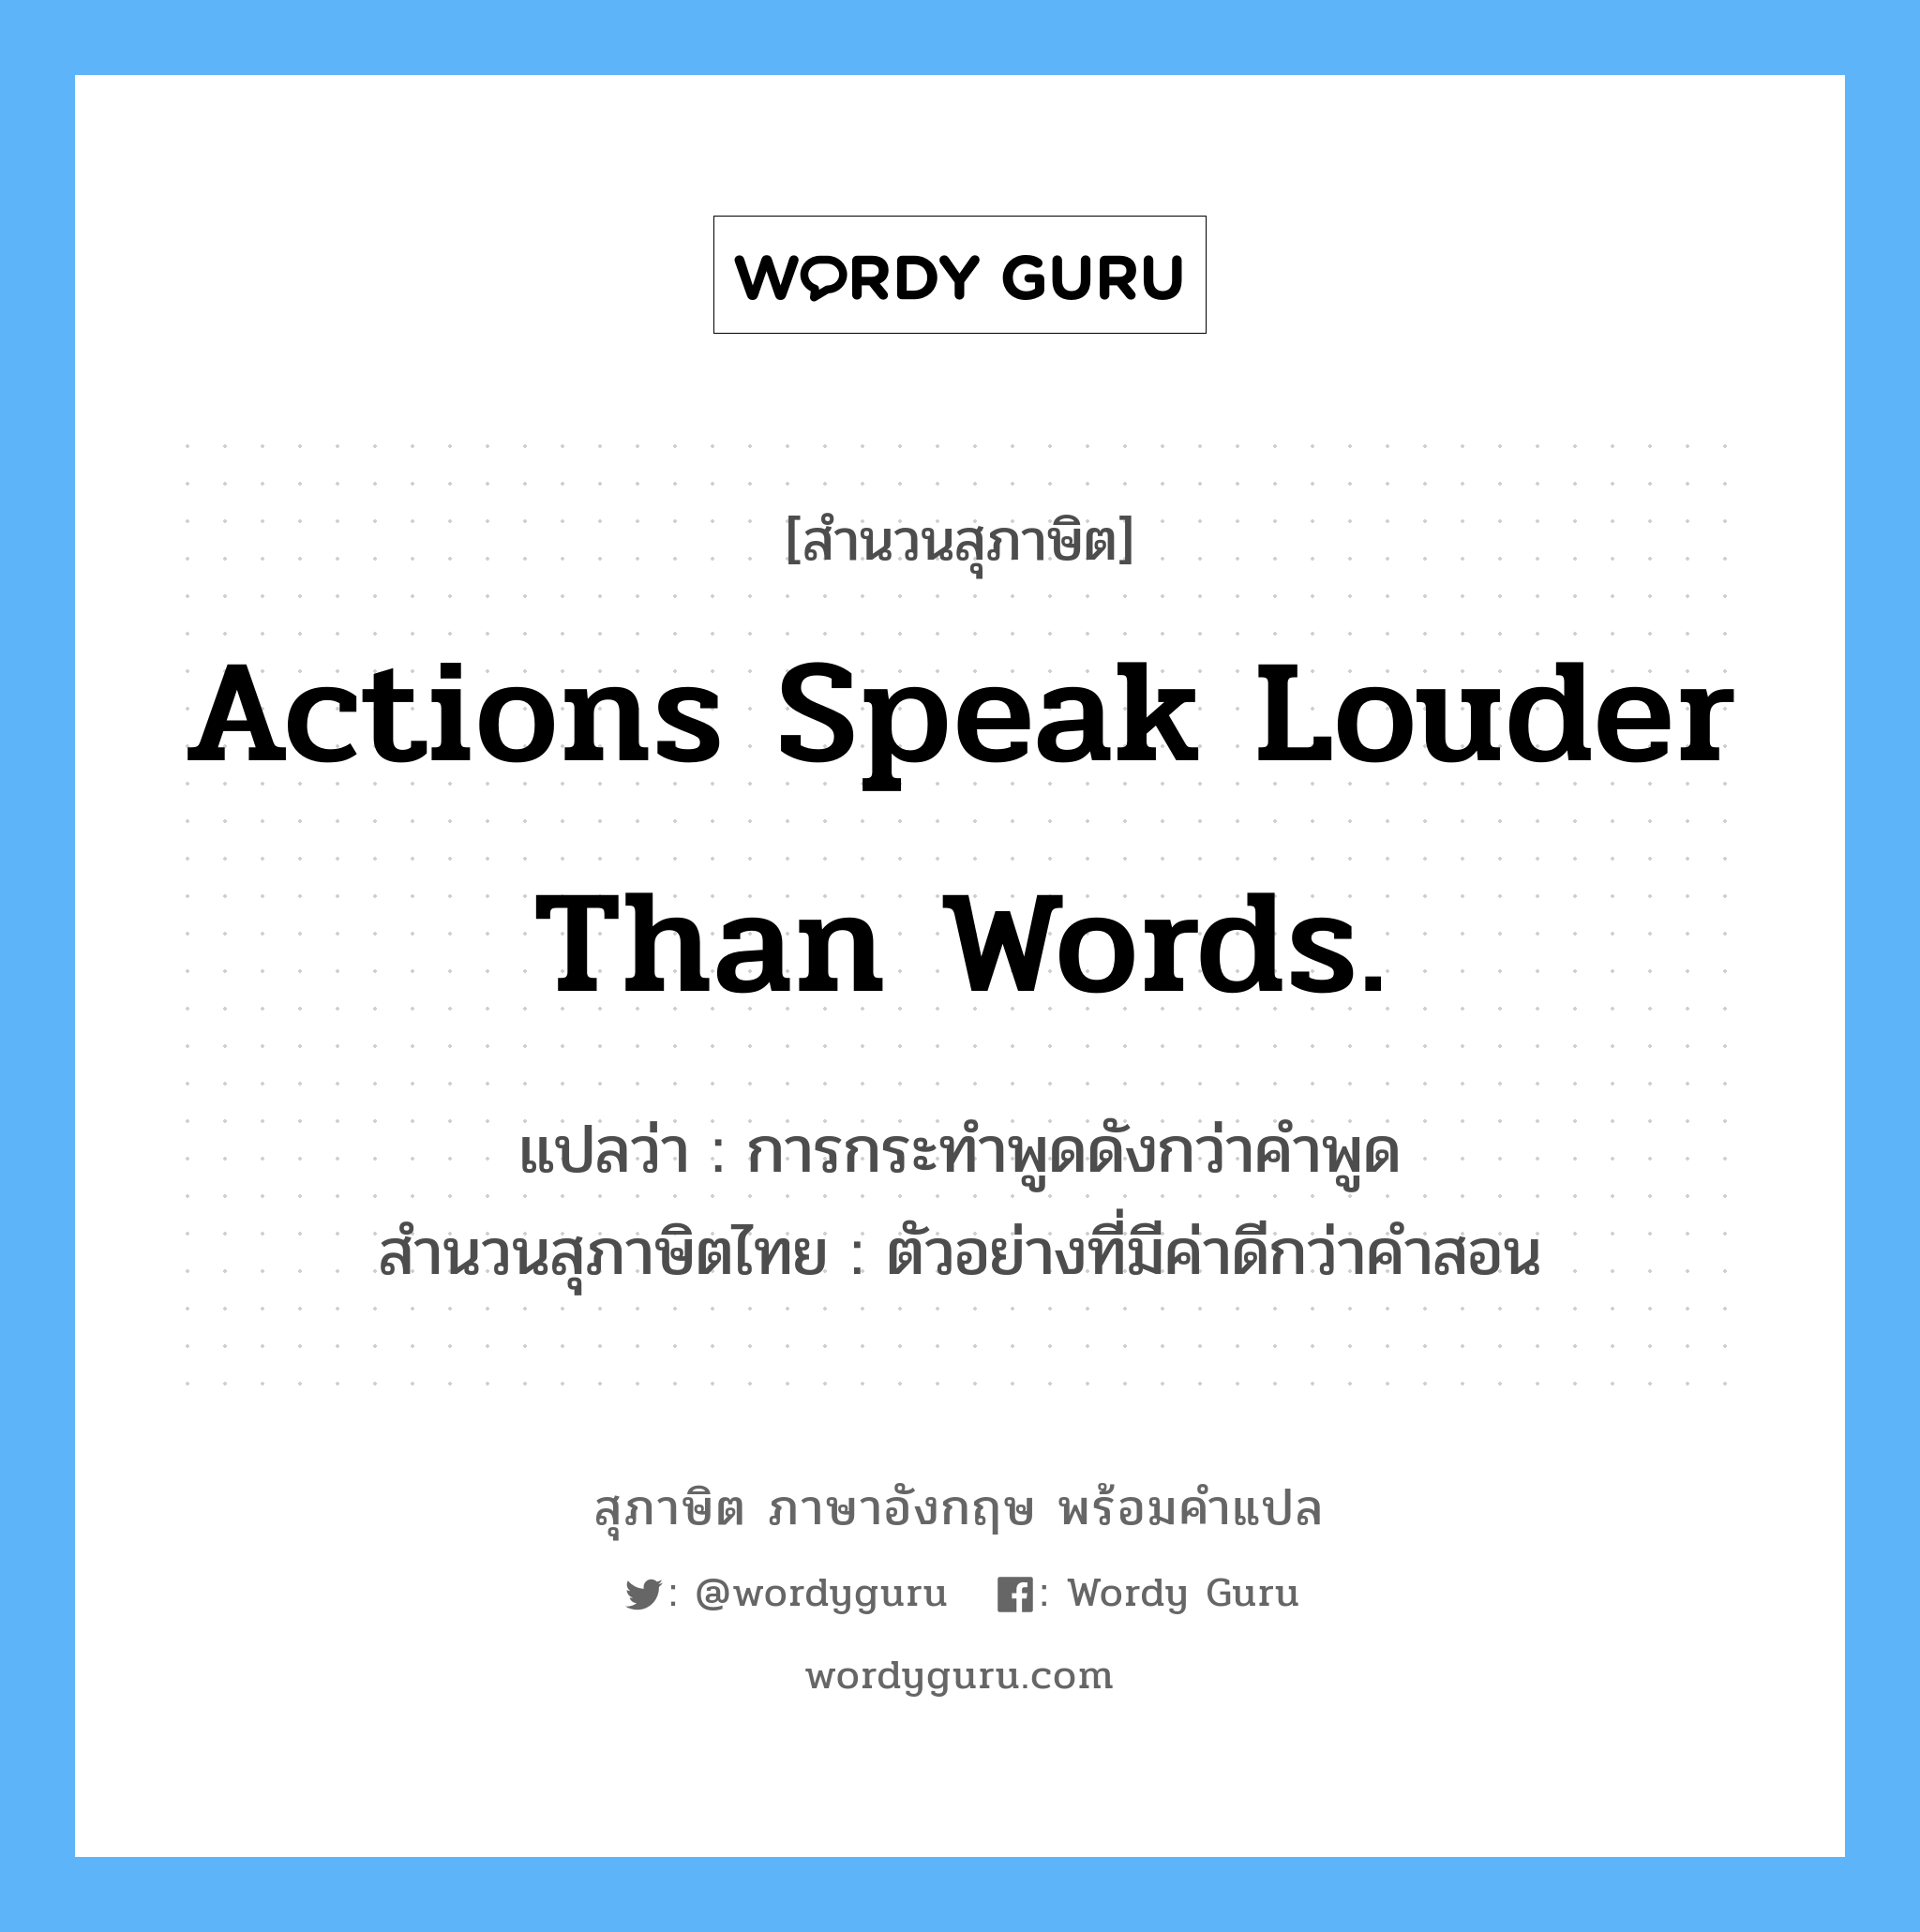 Actions speak louder than words. แปลว่า?, สำนวนสุภาษิต ภาษาอังกฤษ Actions speak louder than words. แปลว่า การกระทำพูดดังกว่าคำพูด สำนวนสุภาษิตไทย ตัวอย่างที่มีค่าดีกว่าคำสอน